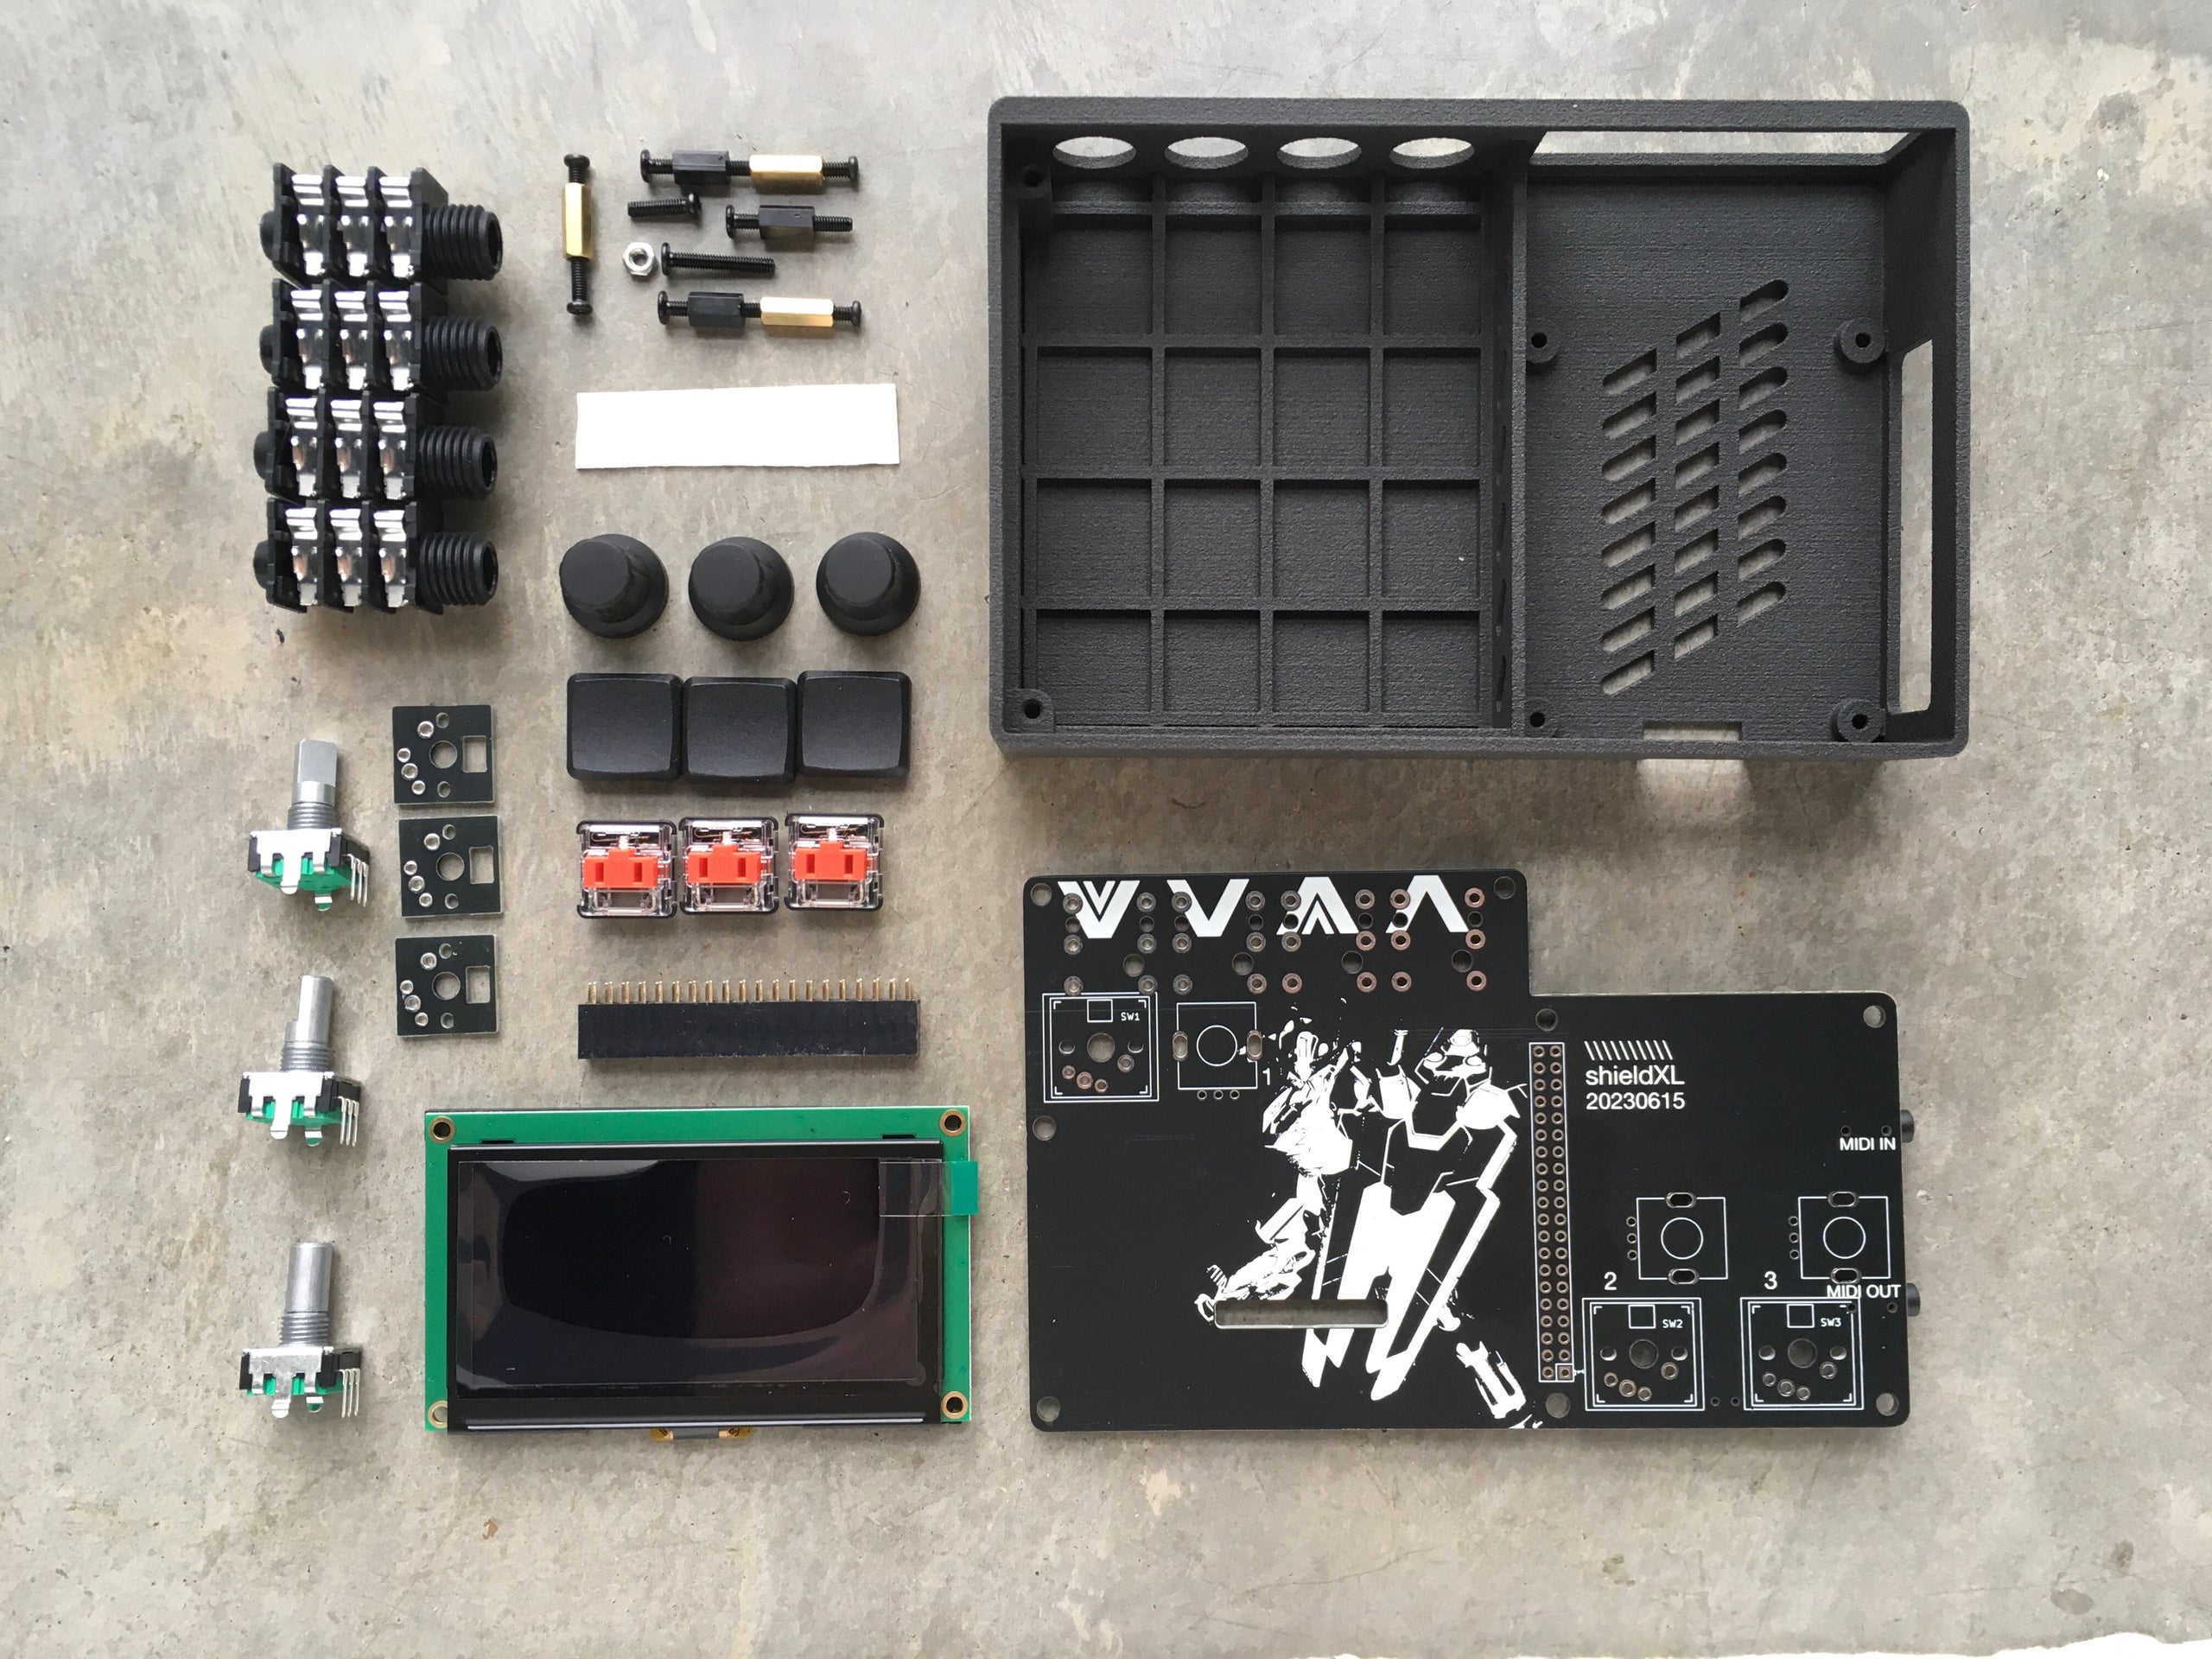 shieldXL (DIY norns synthesizer kit)